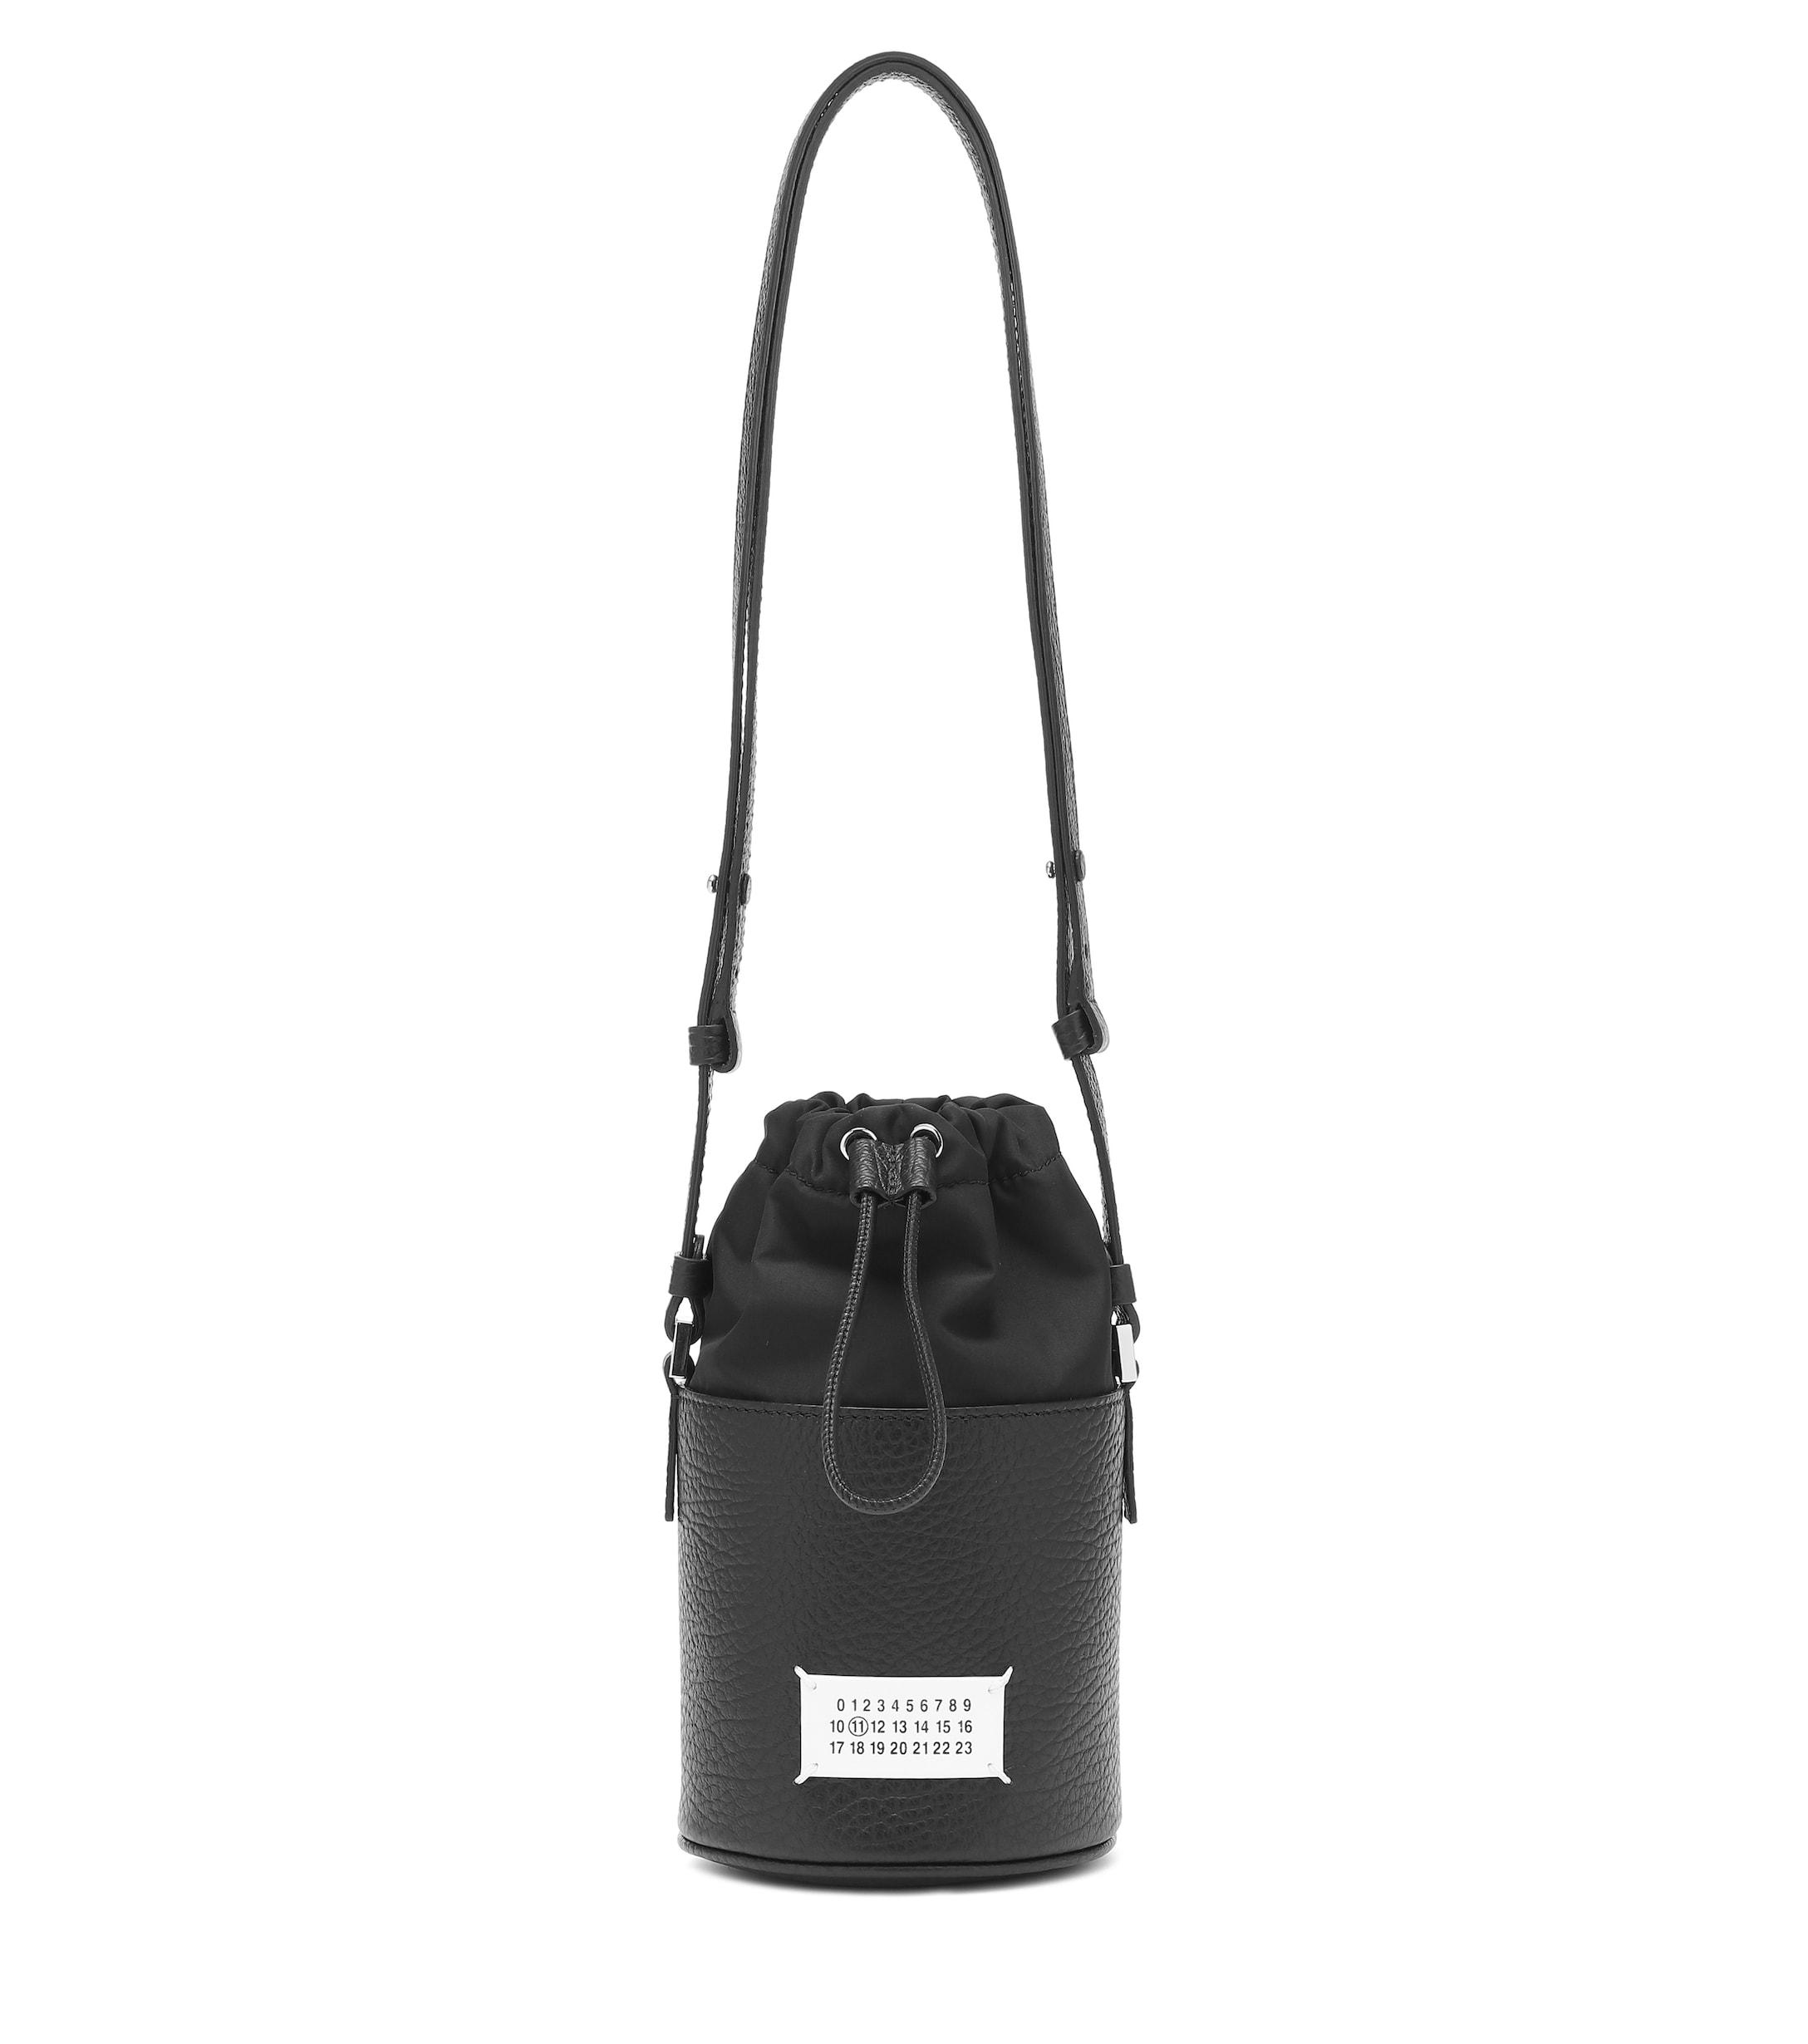 Maison Margiela 5ac Grained-leather Bucket Bag in Black - Lyst